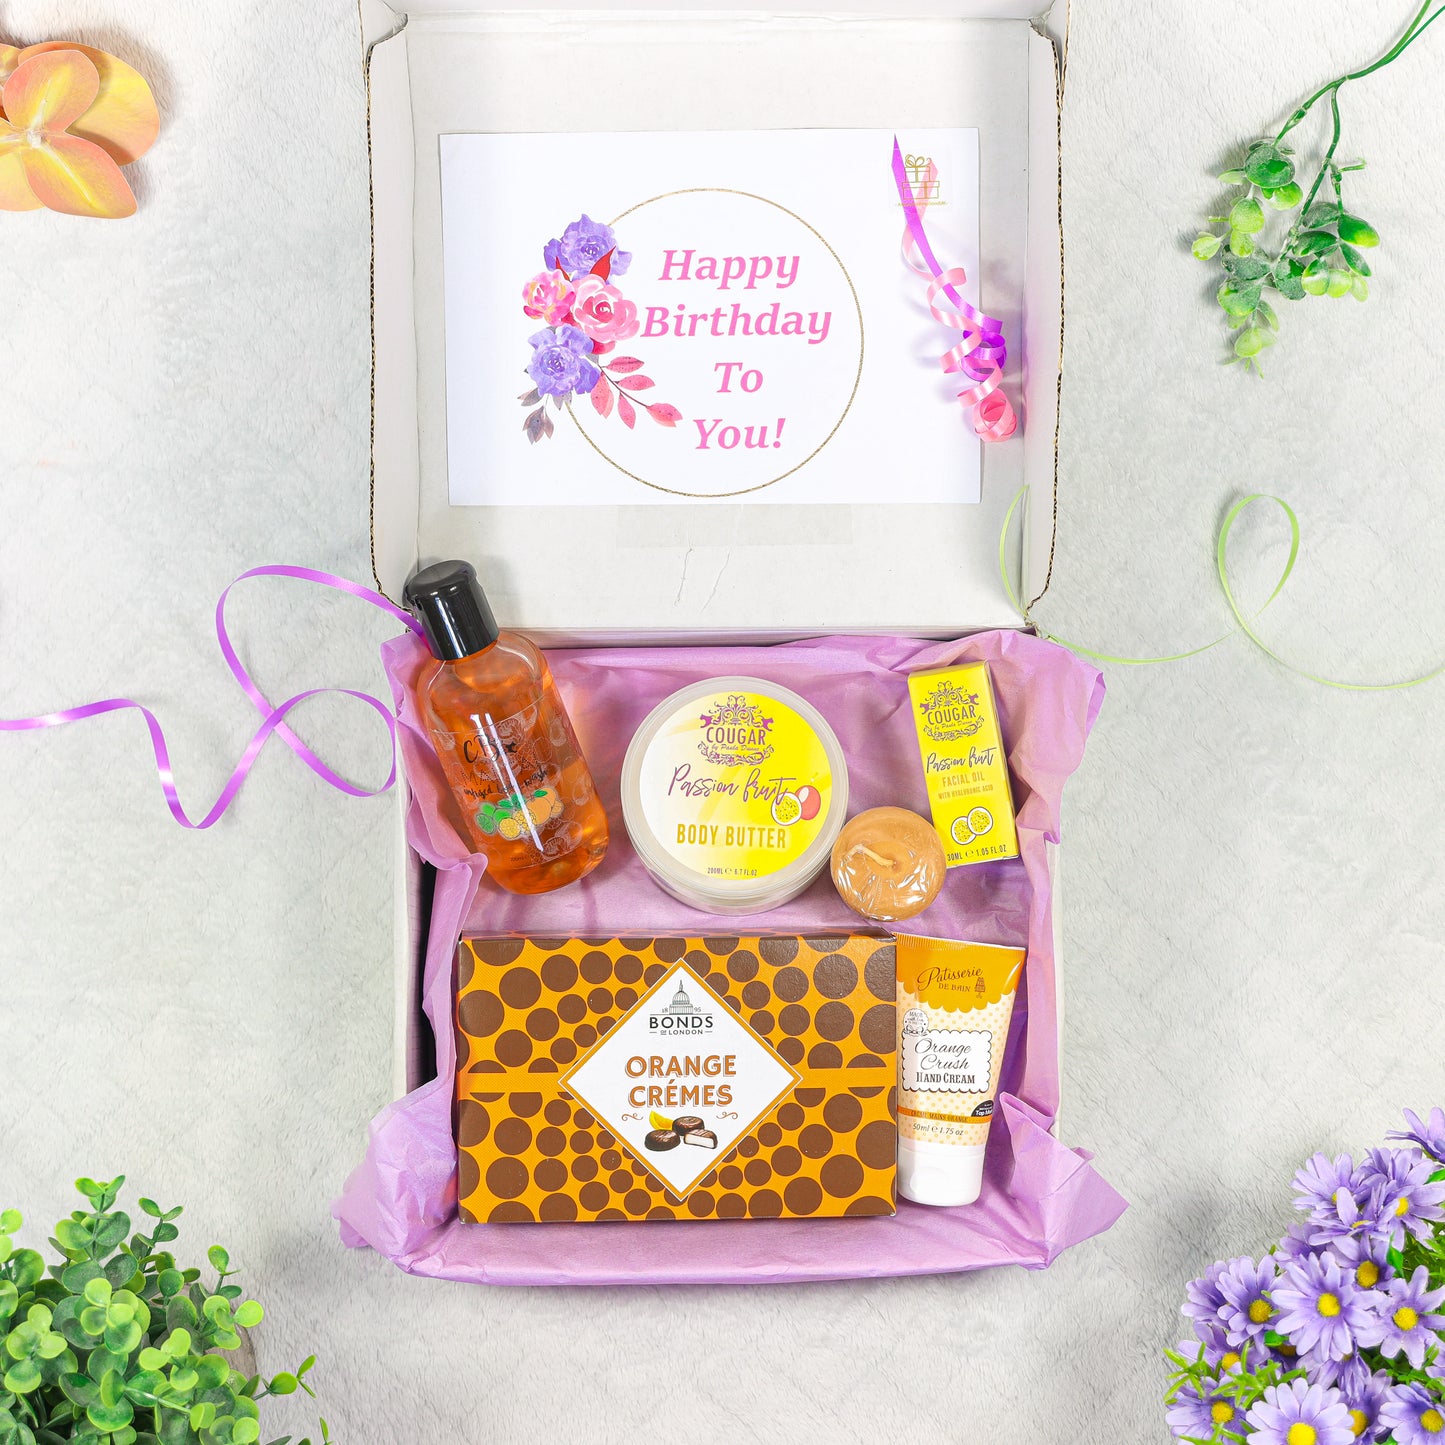 Passionfruit Pamper Hamper Skincare Gift Box  - Always Looking Good -   